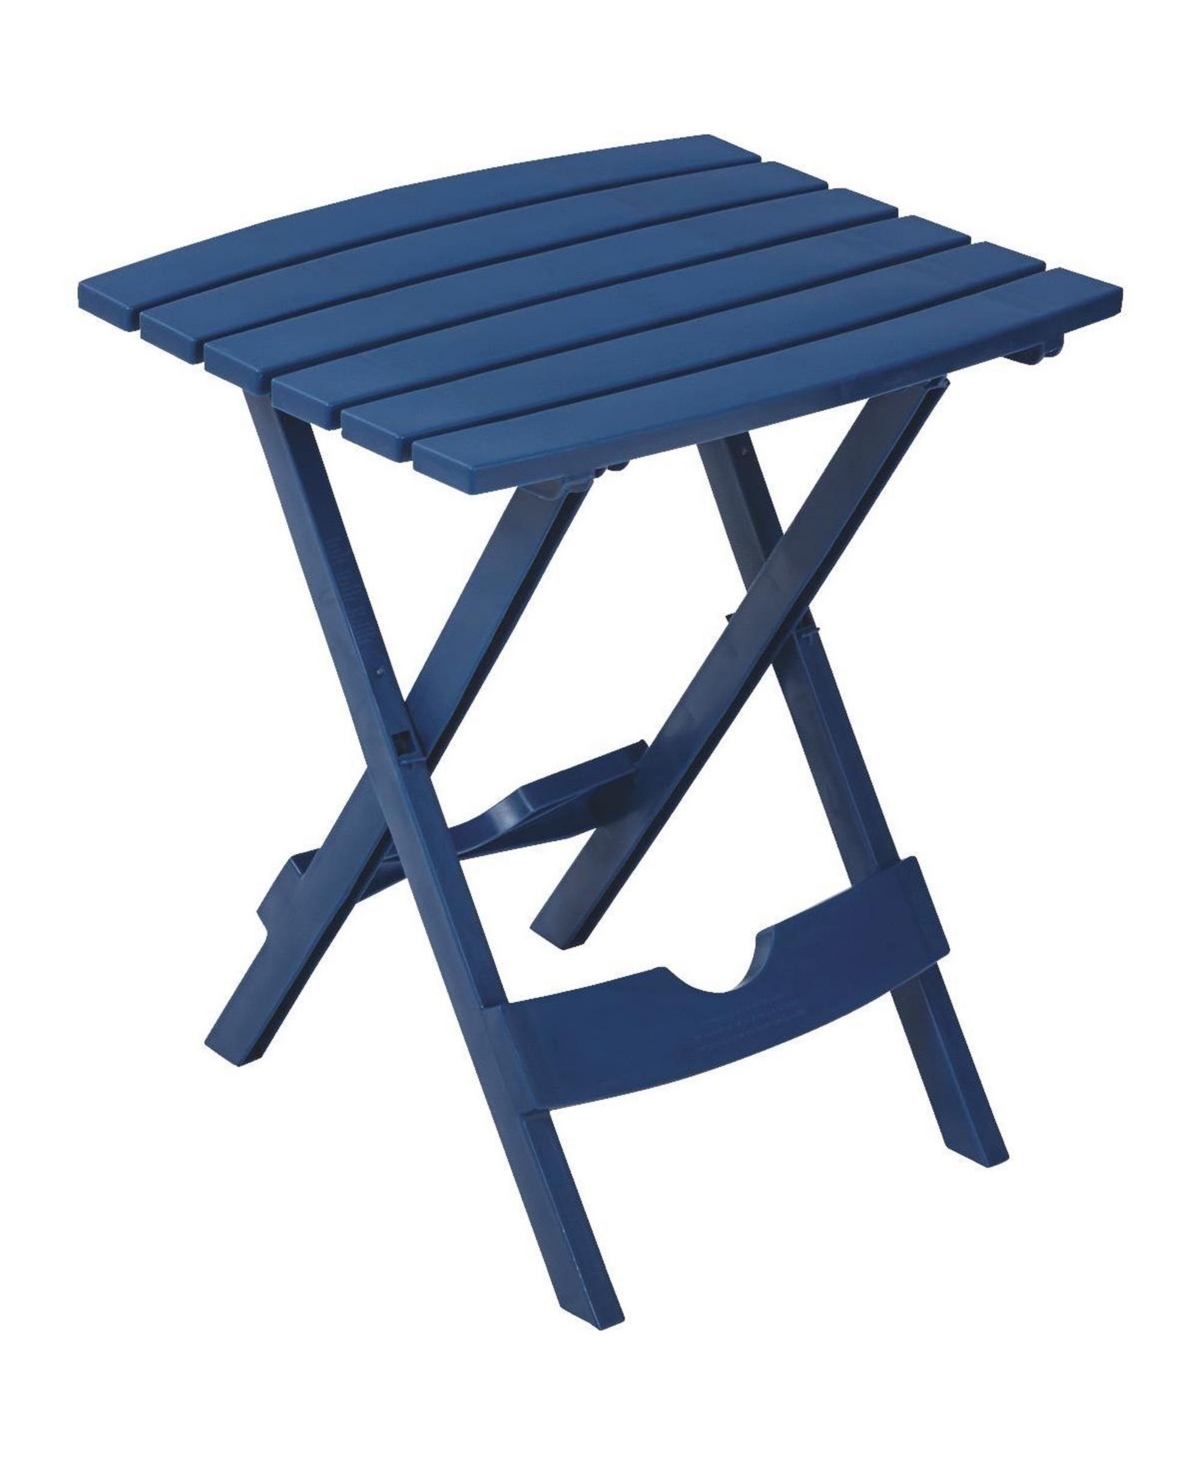 Adams Quik-Fold Outdoor Plastic Side Table, Monaco Blue, 15 inches